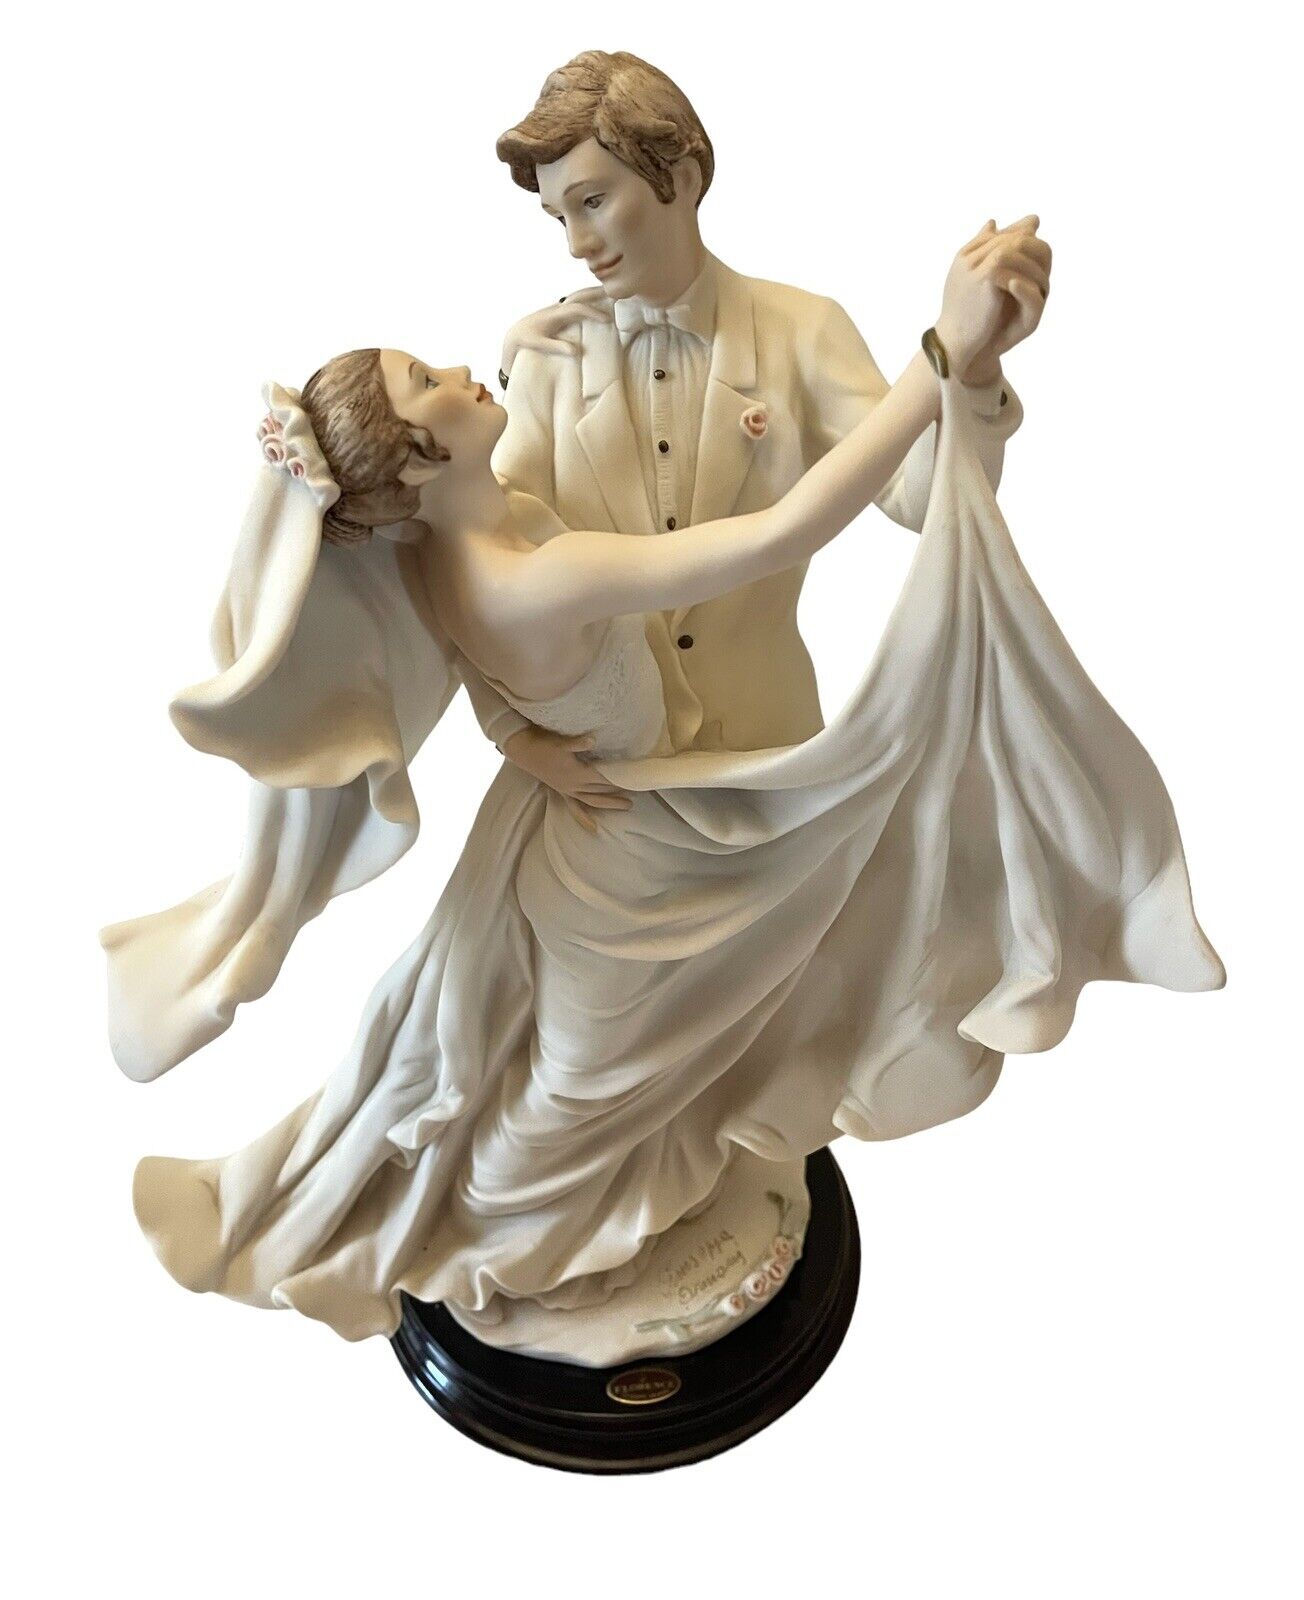 GIUSEPPE ARMANI Signed TRUE LOVE Wedding Dance 12.5” Sculpture Florence Italy